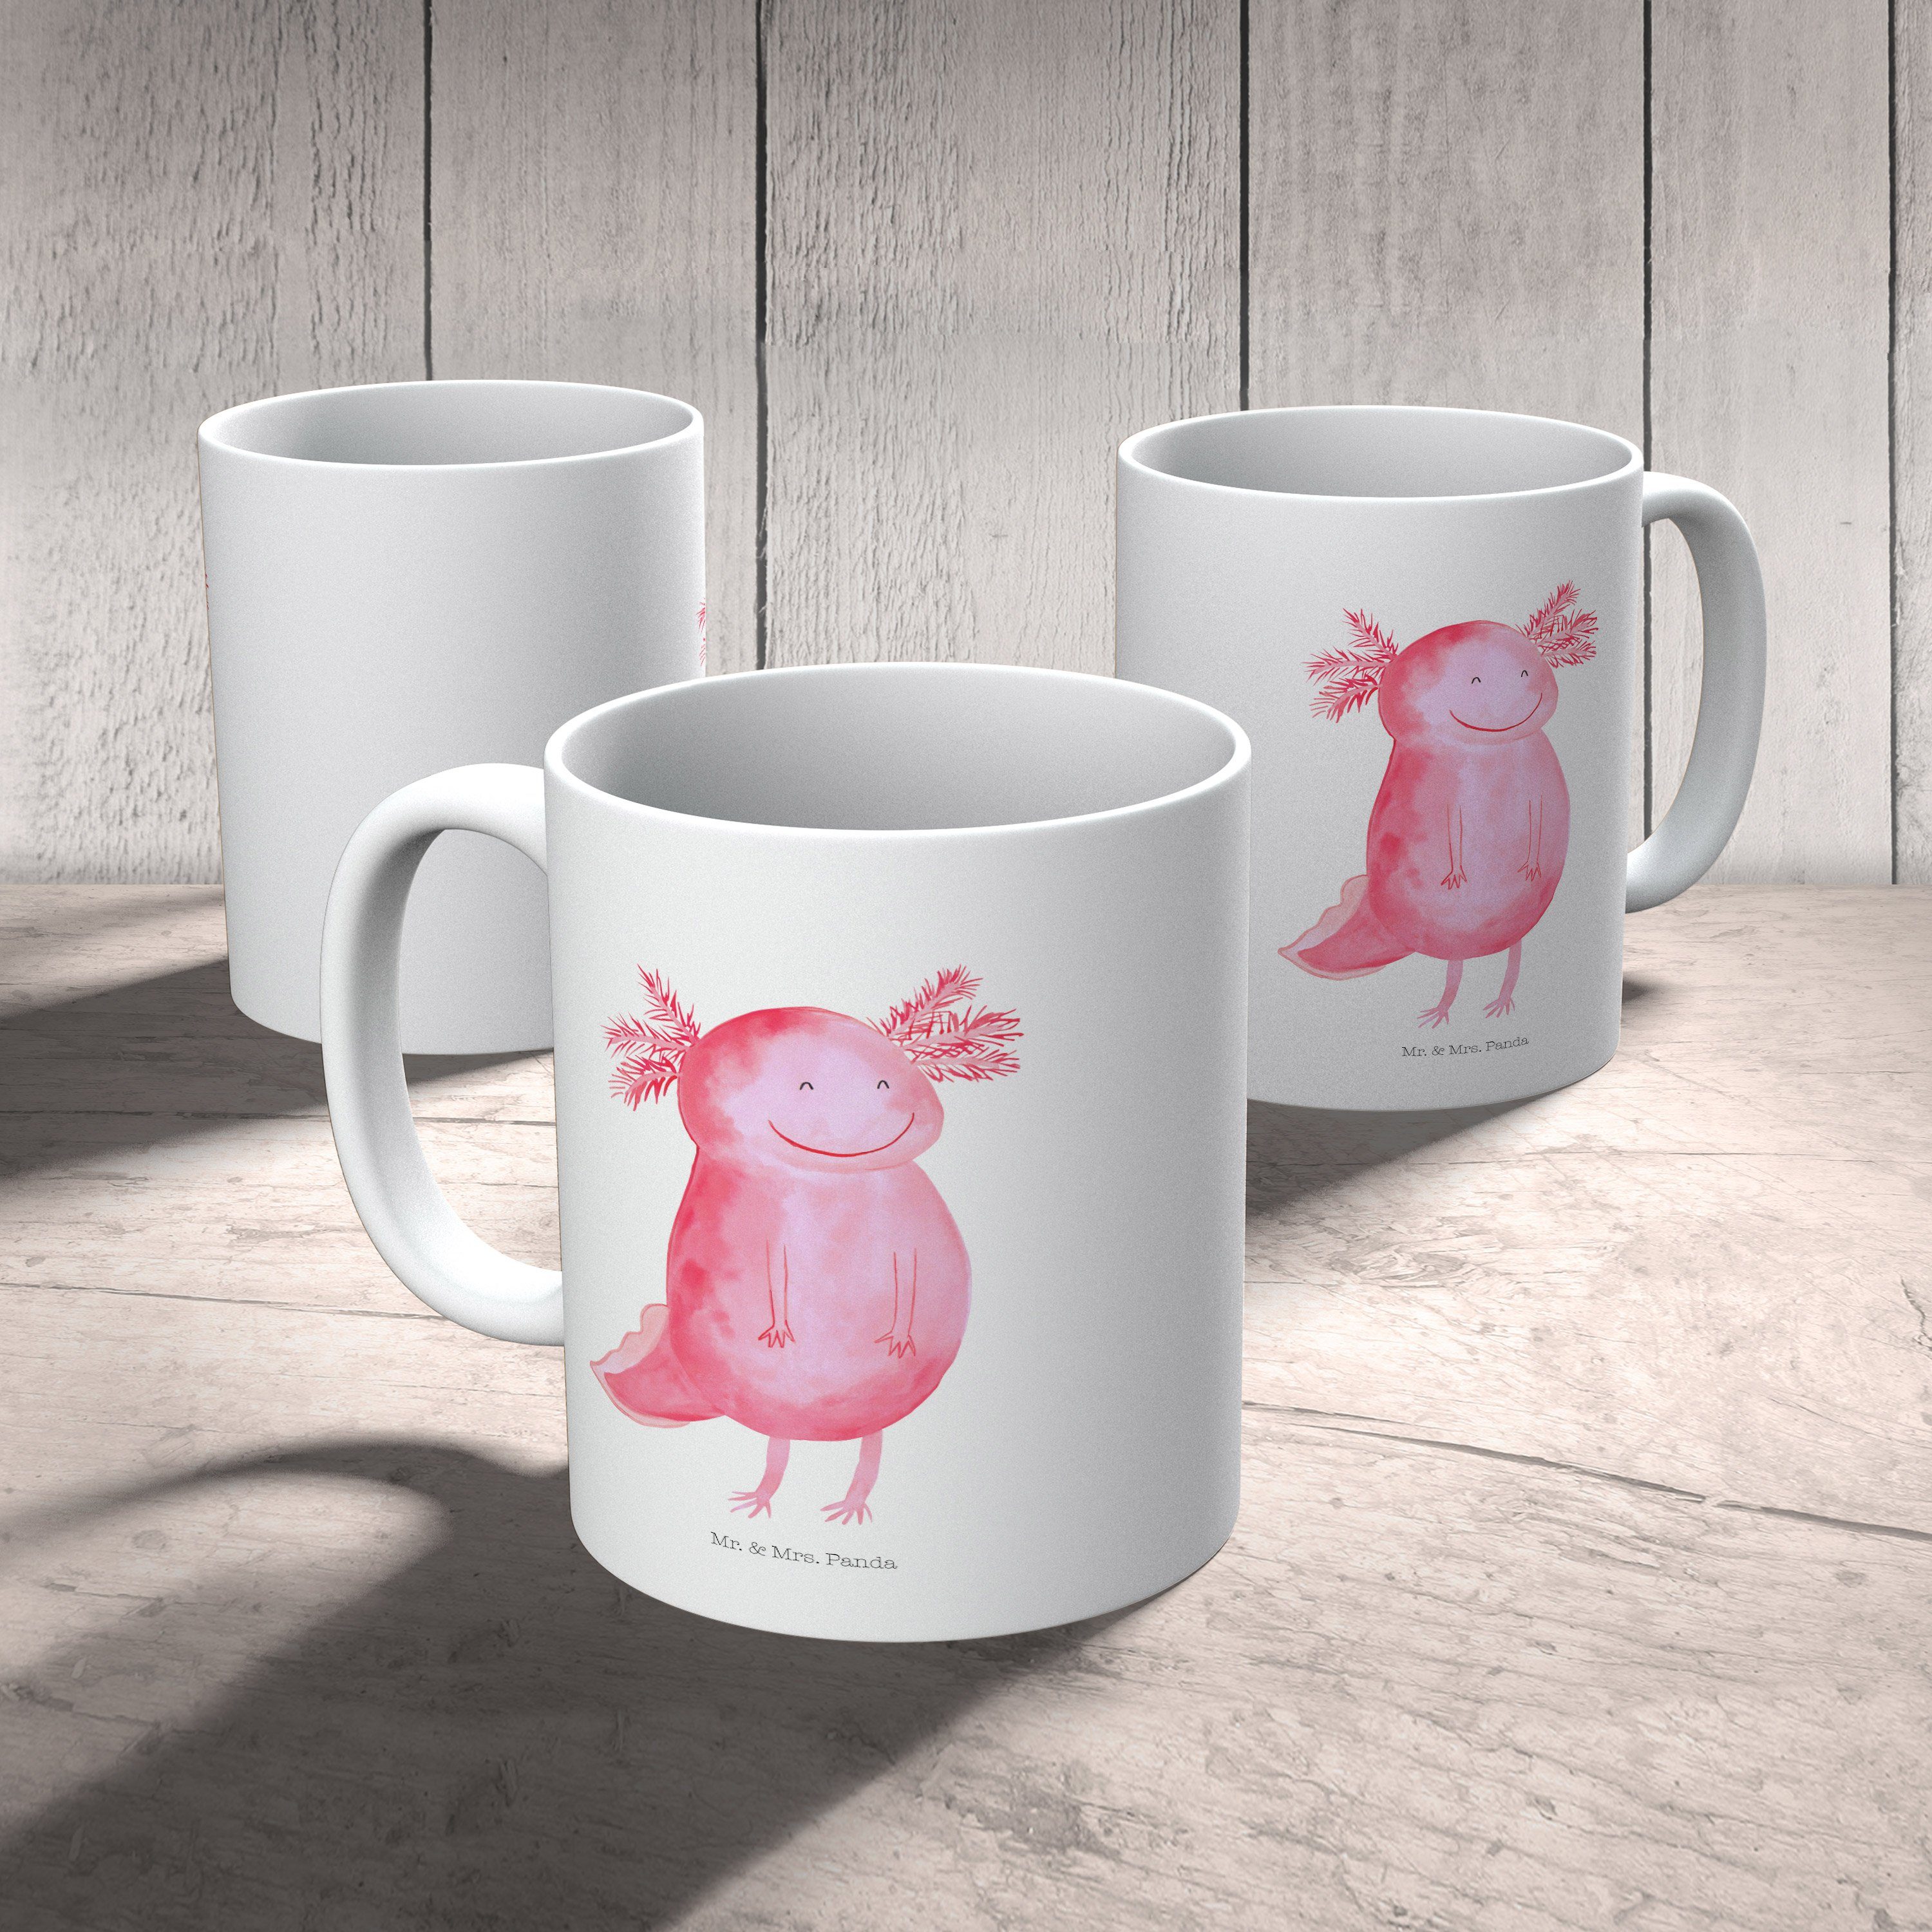 Mr. & Mrs. Molch, - Tasse, Keramiktass, Lurch, Weiß Axolotl - glücklich Tasse Geschenk, Keramik Panda